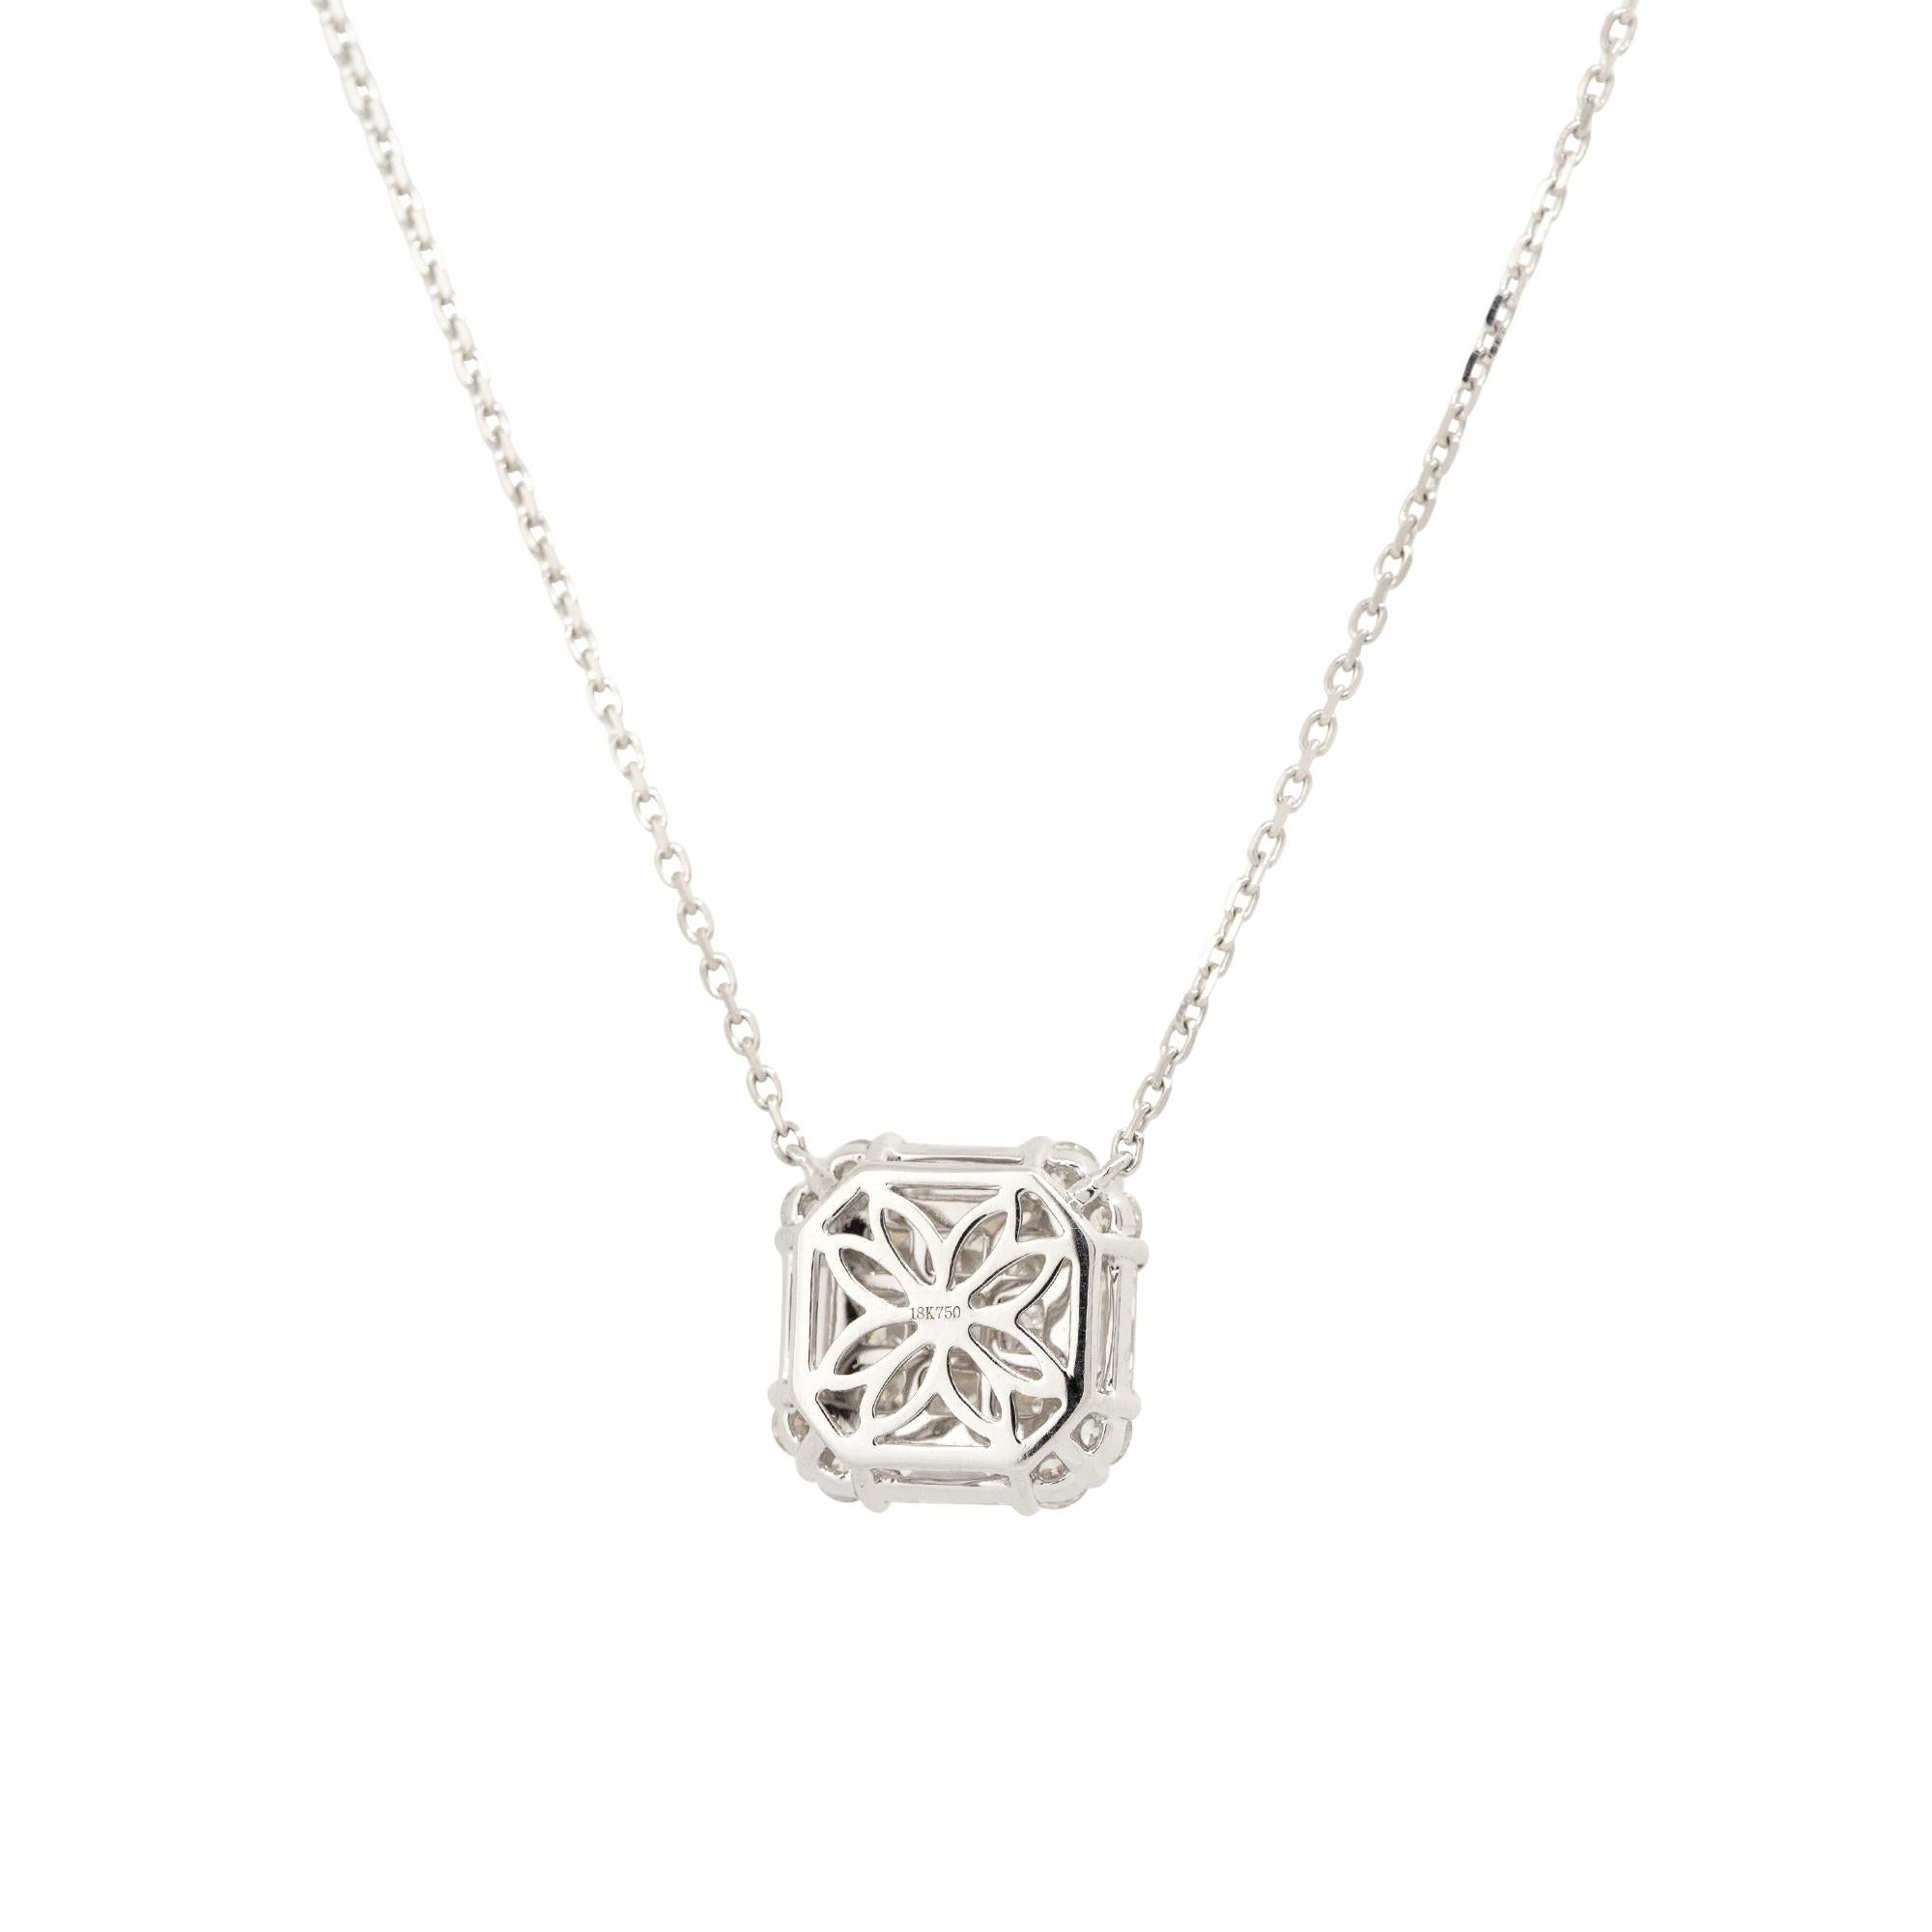 1.87 Carat Princess Cut Diamond Pendant Necklace 18 Karat In Stock In Excellent Condition For Sale In Boca Raton, FL